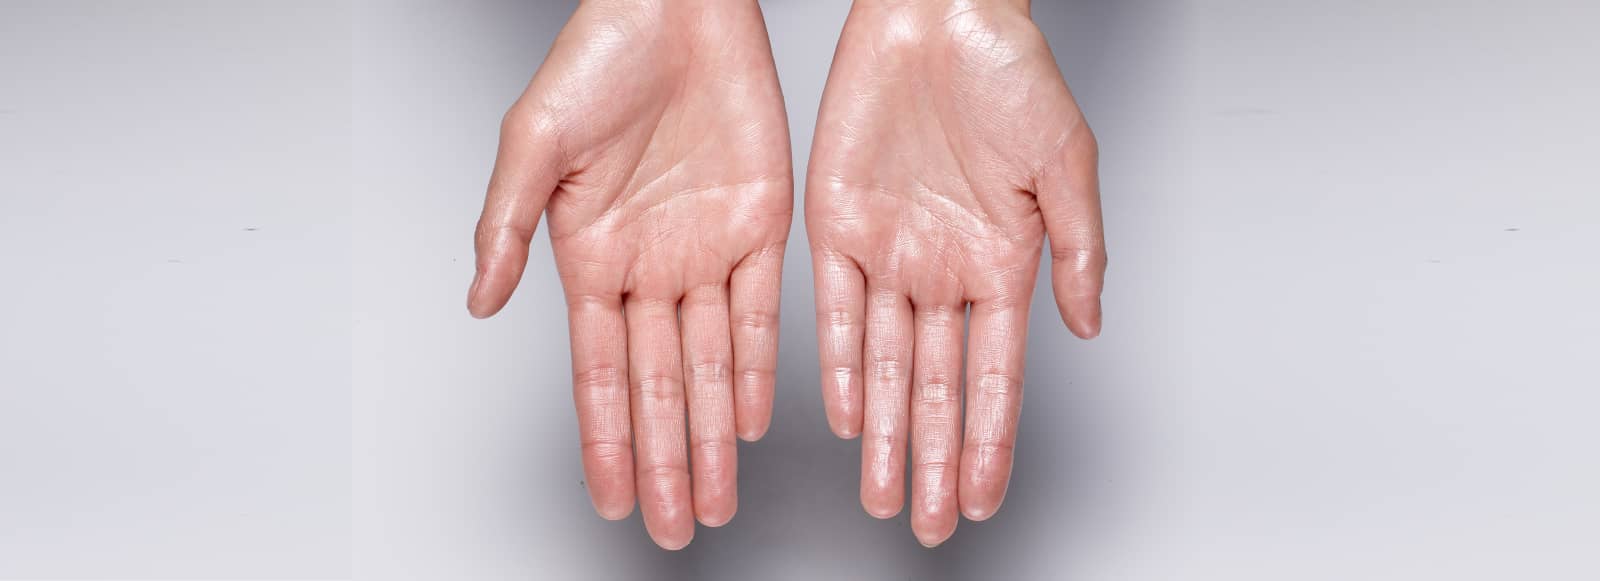 How to Treat Sweaty Hands?